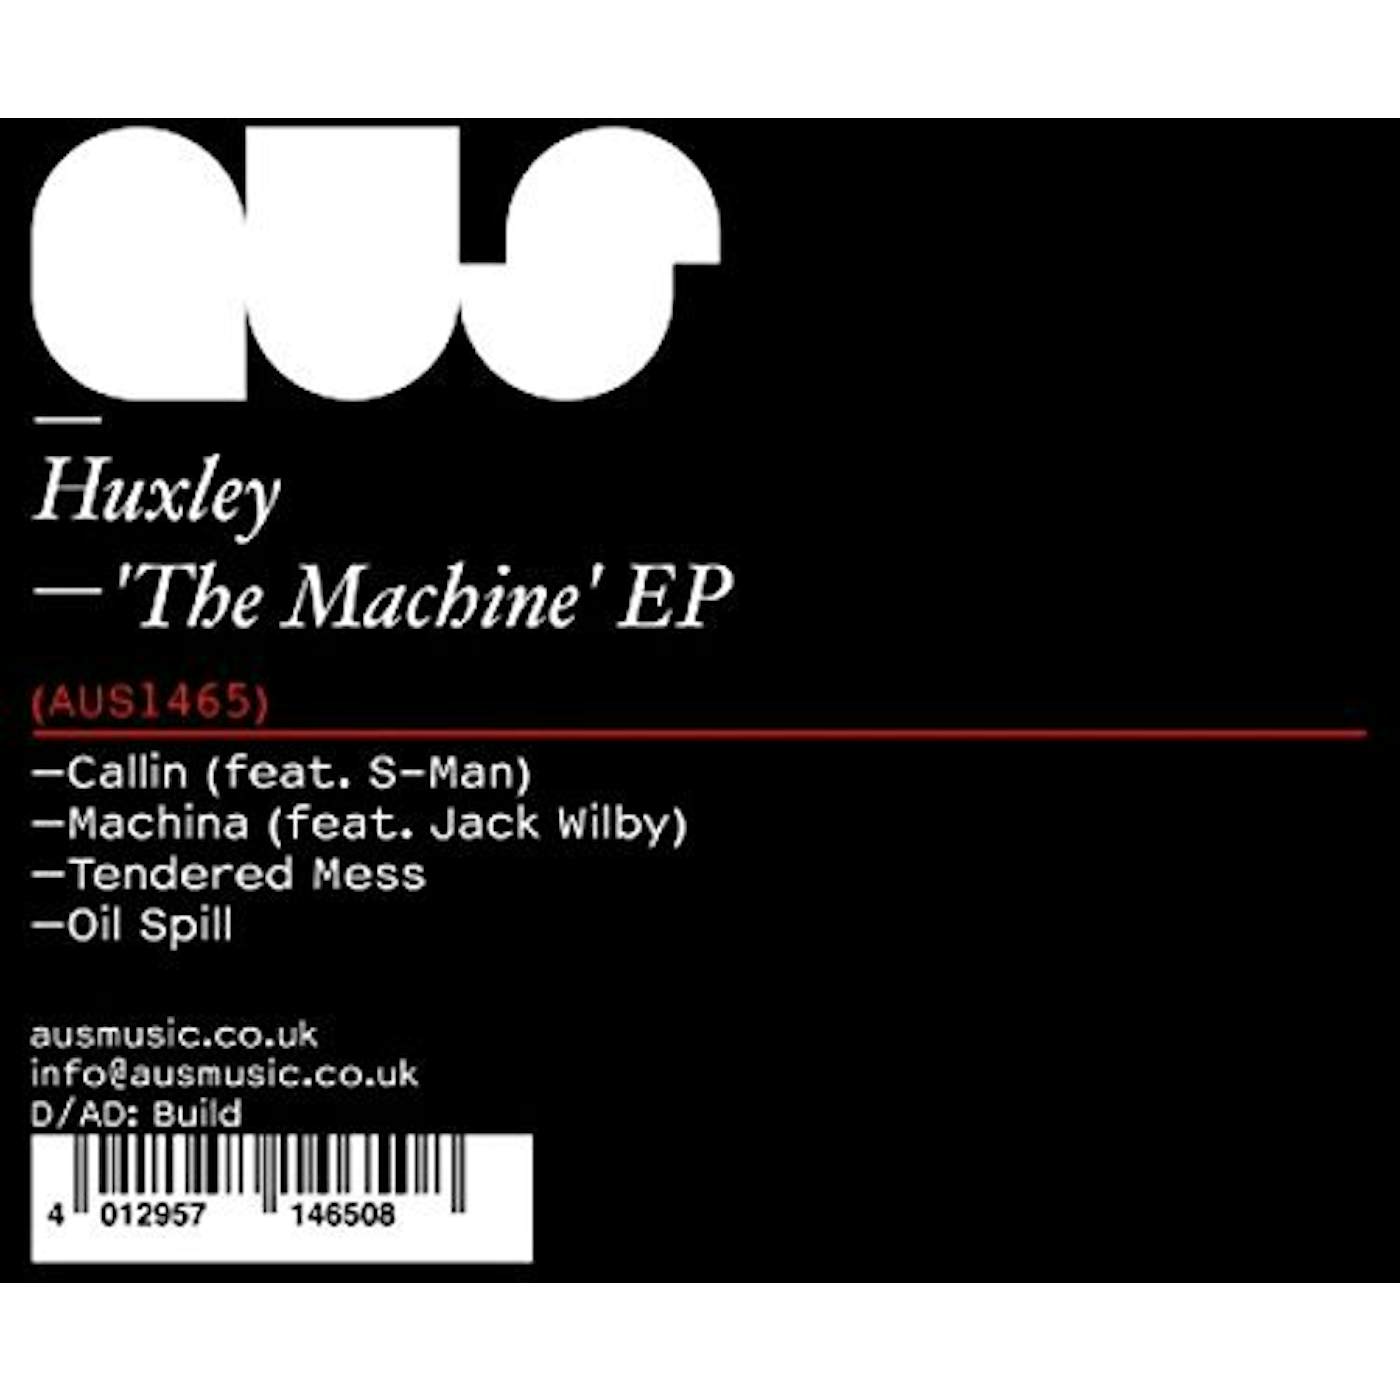 Huxley MACHINE Vinyl Record